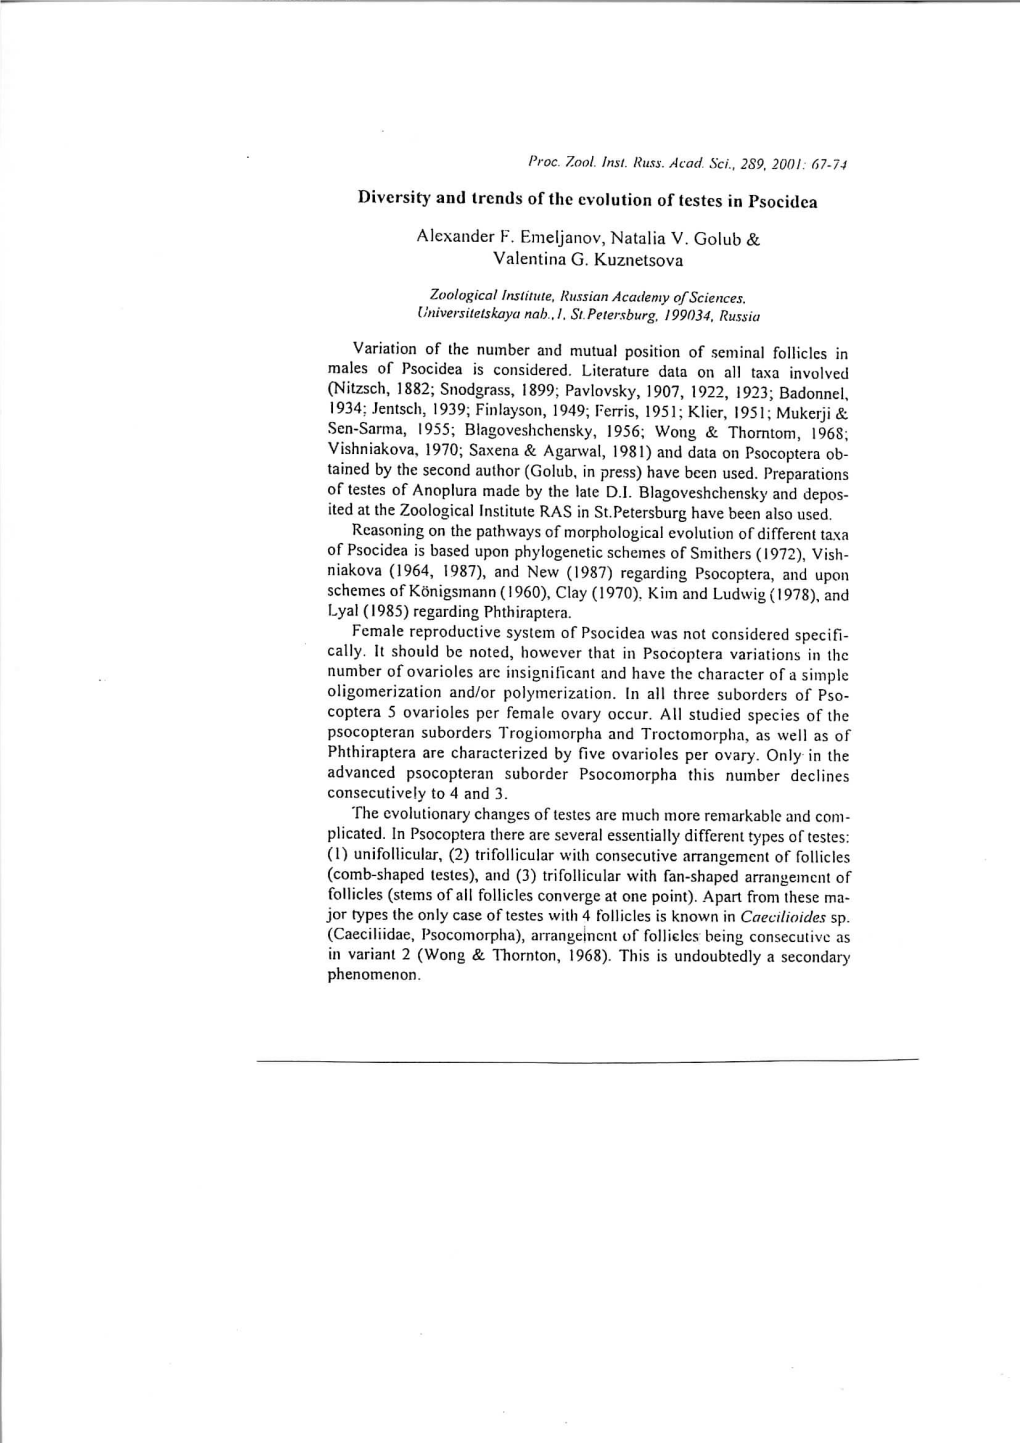 Diversity and Trends of the Evolution of Testes in Psocidea Alexander P. Emeljanov, Natalia V. Golub & Valentina G. Kuznetso